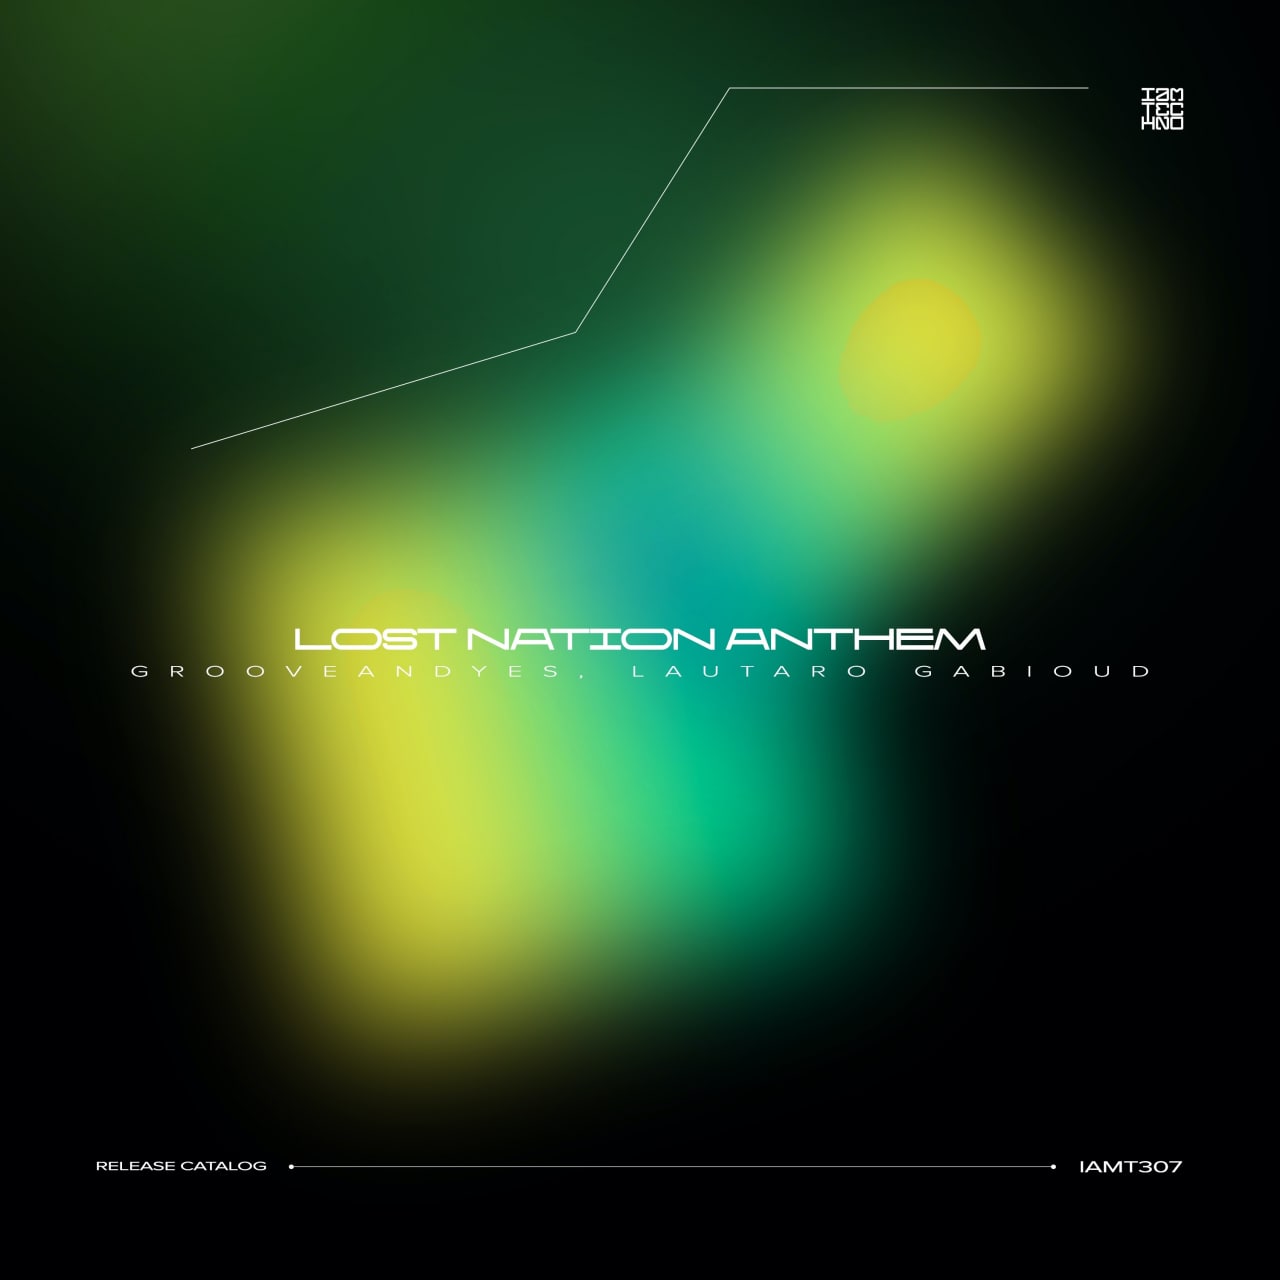 Grooveandyes & Lautaro Gabioud - Stellar Drive (Original Mix)